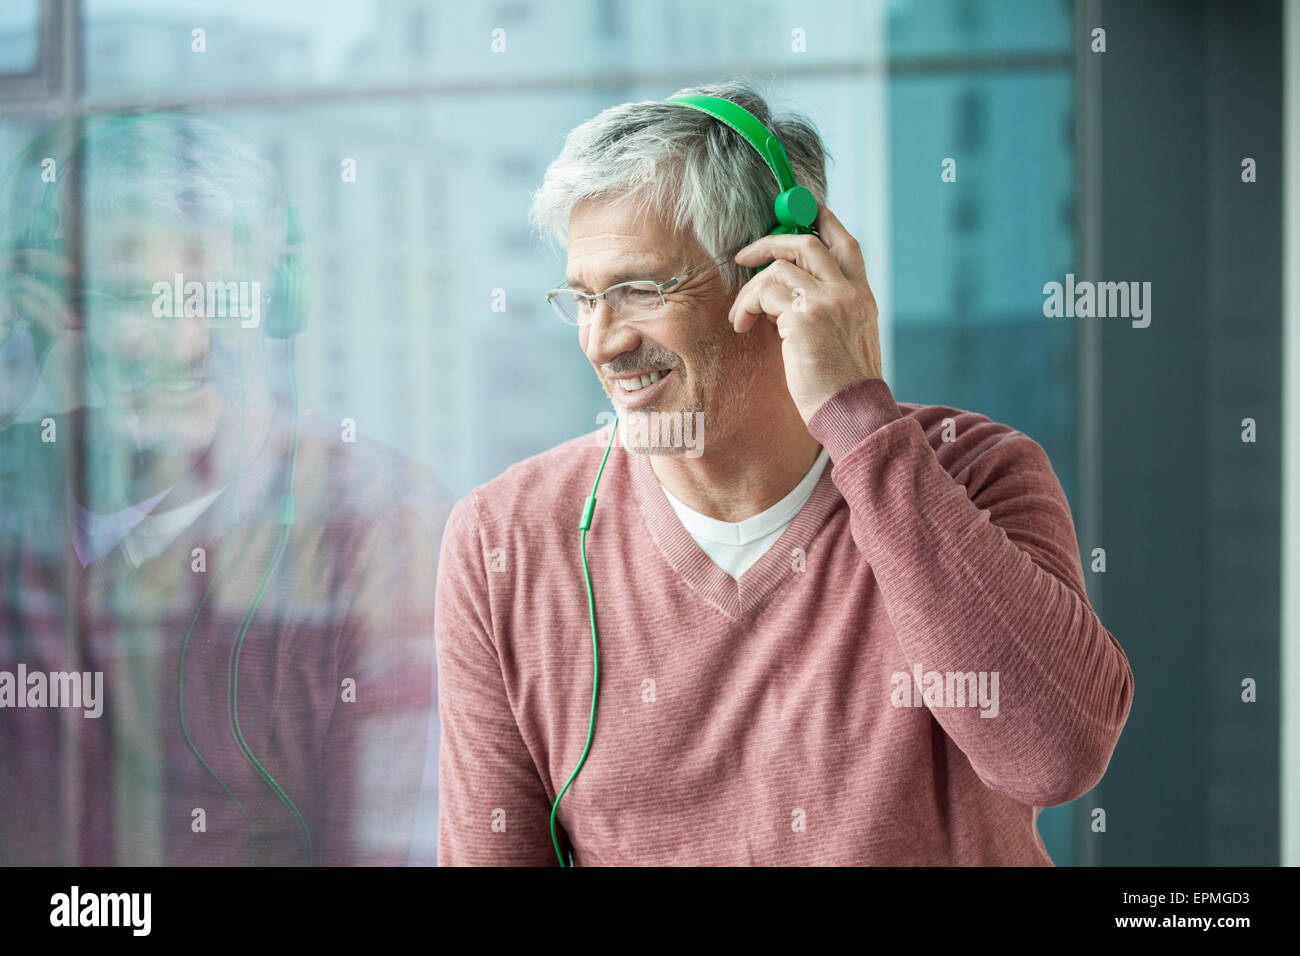 Man with green headphones looking through window Stock Photo